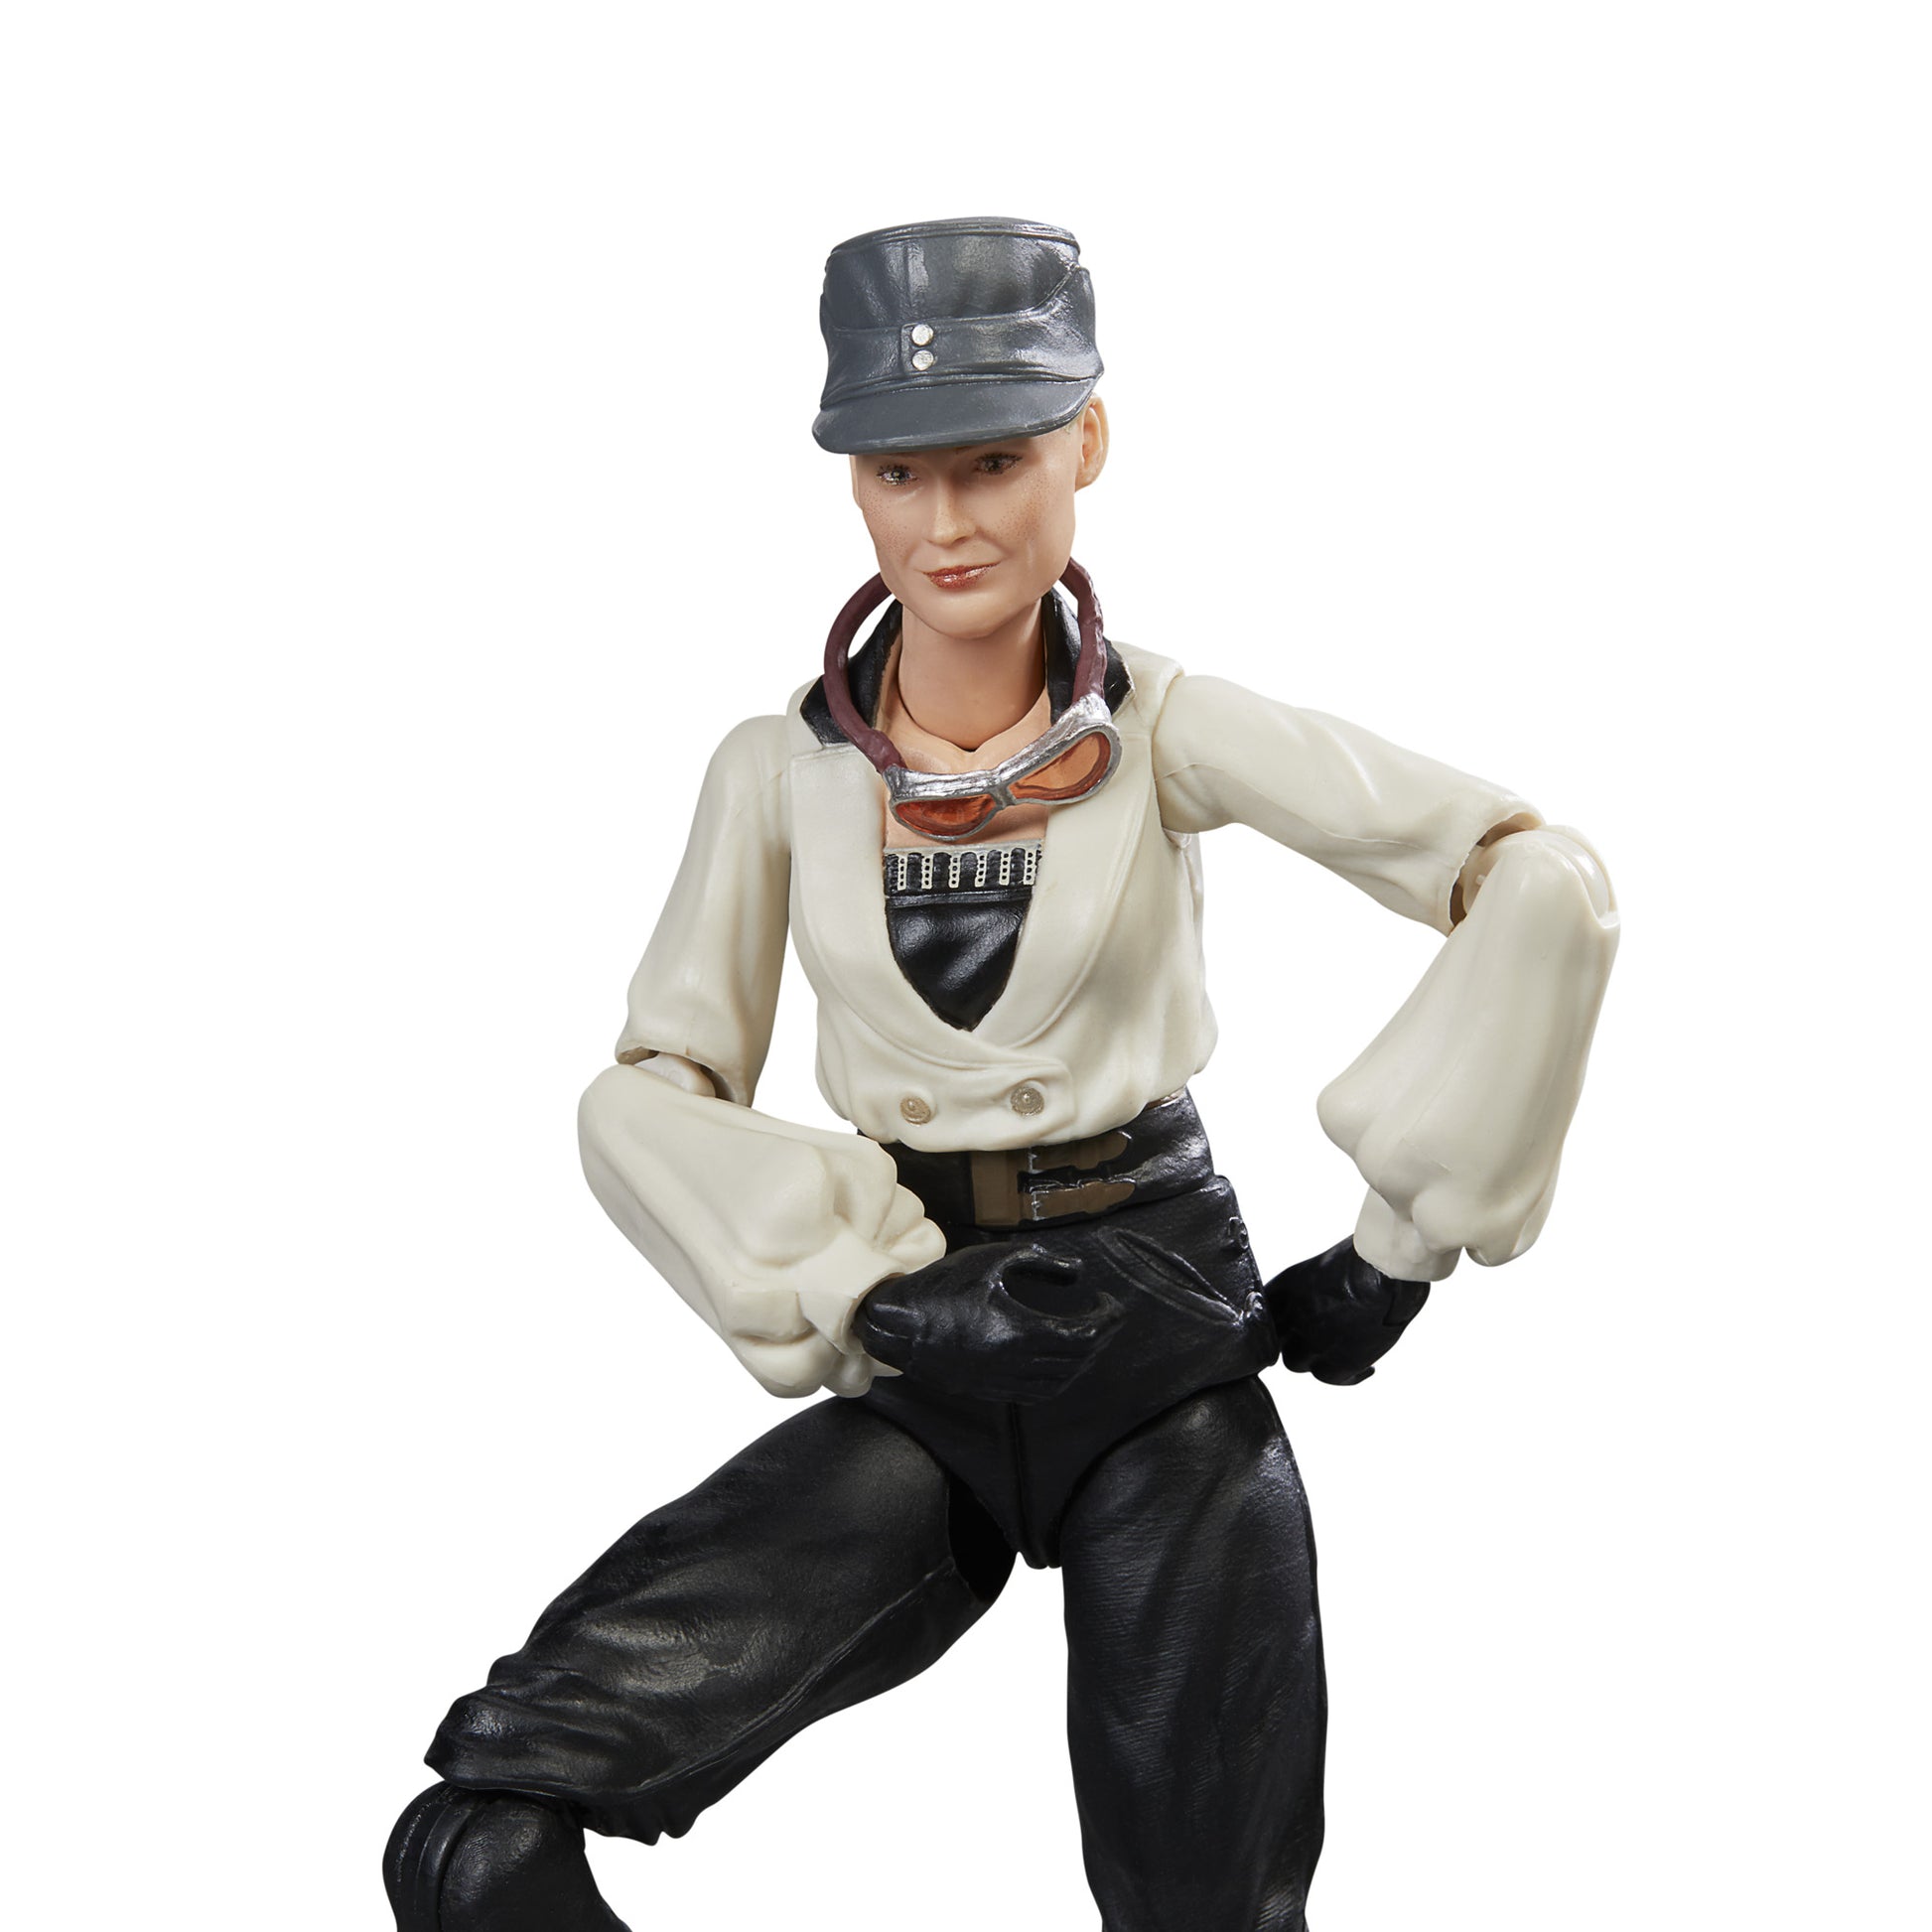 Indiana Jones Adventure Series Dr. Elsa Schneider Action Figure Toy close up look - Heretoserveyou